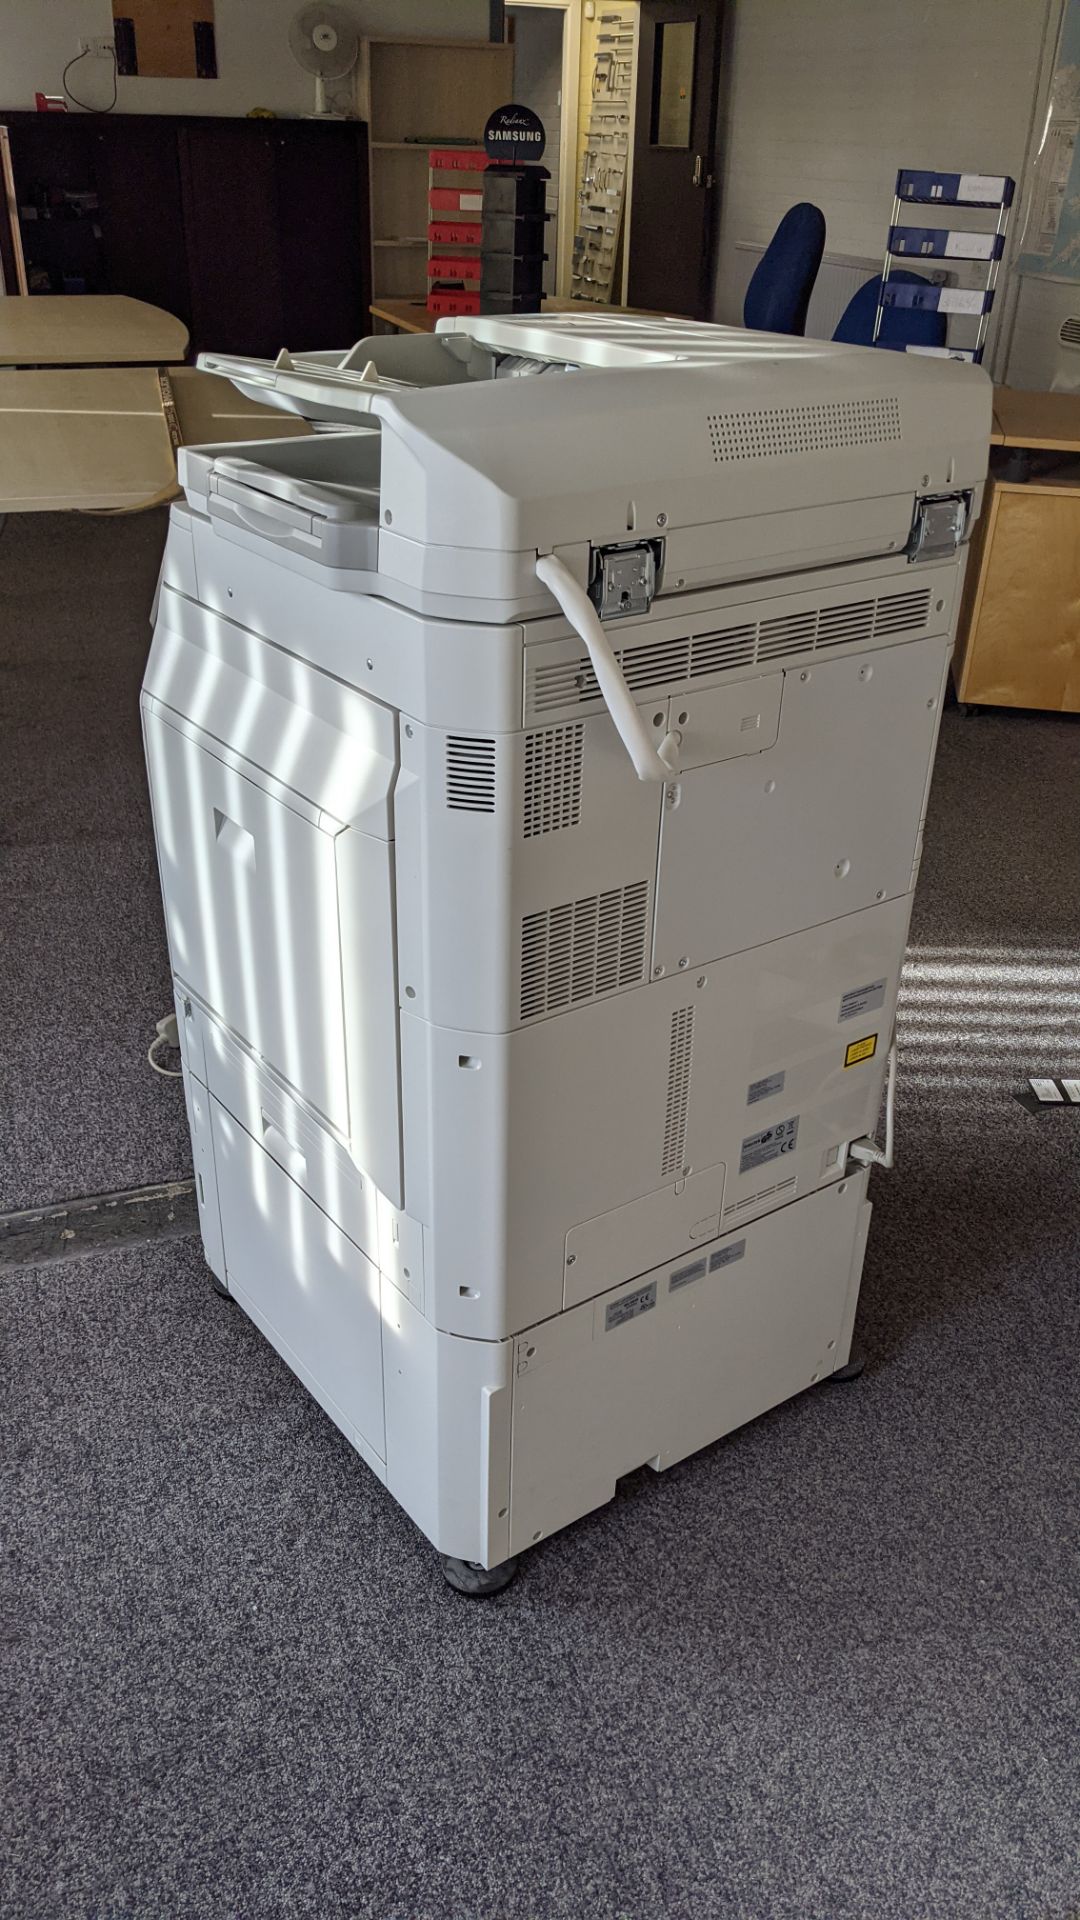 Sharp MX3070 floor standing copier with multi paper bins, touchscreen control, ADF, etc. - Image 4 of 13